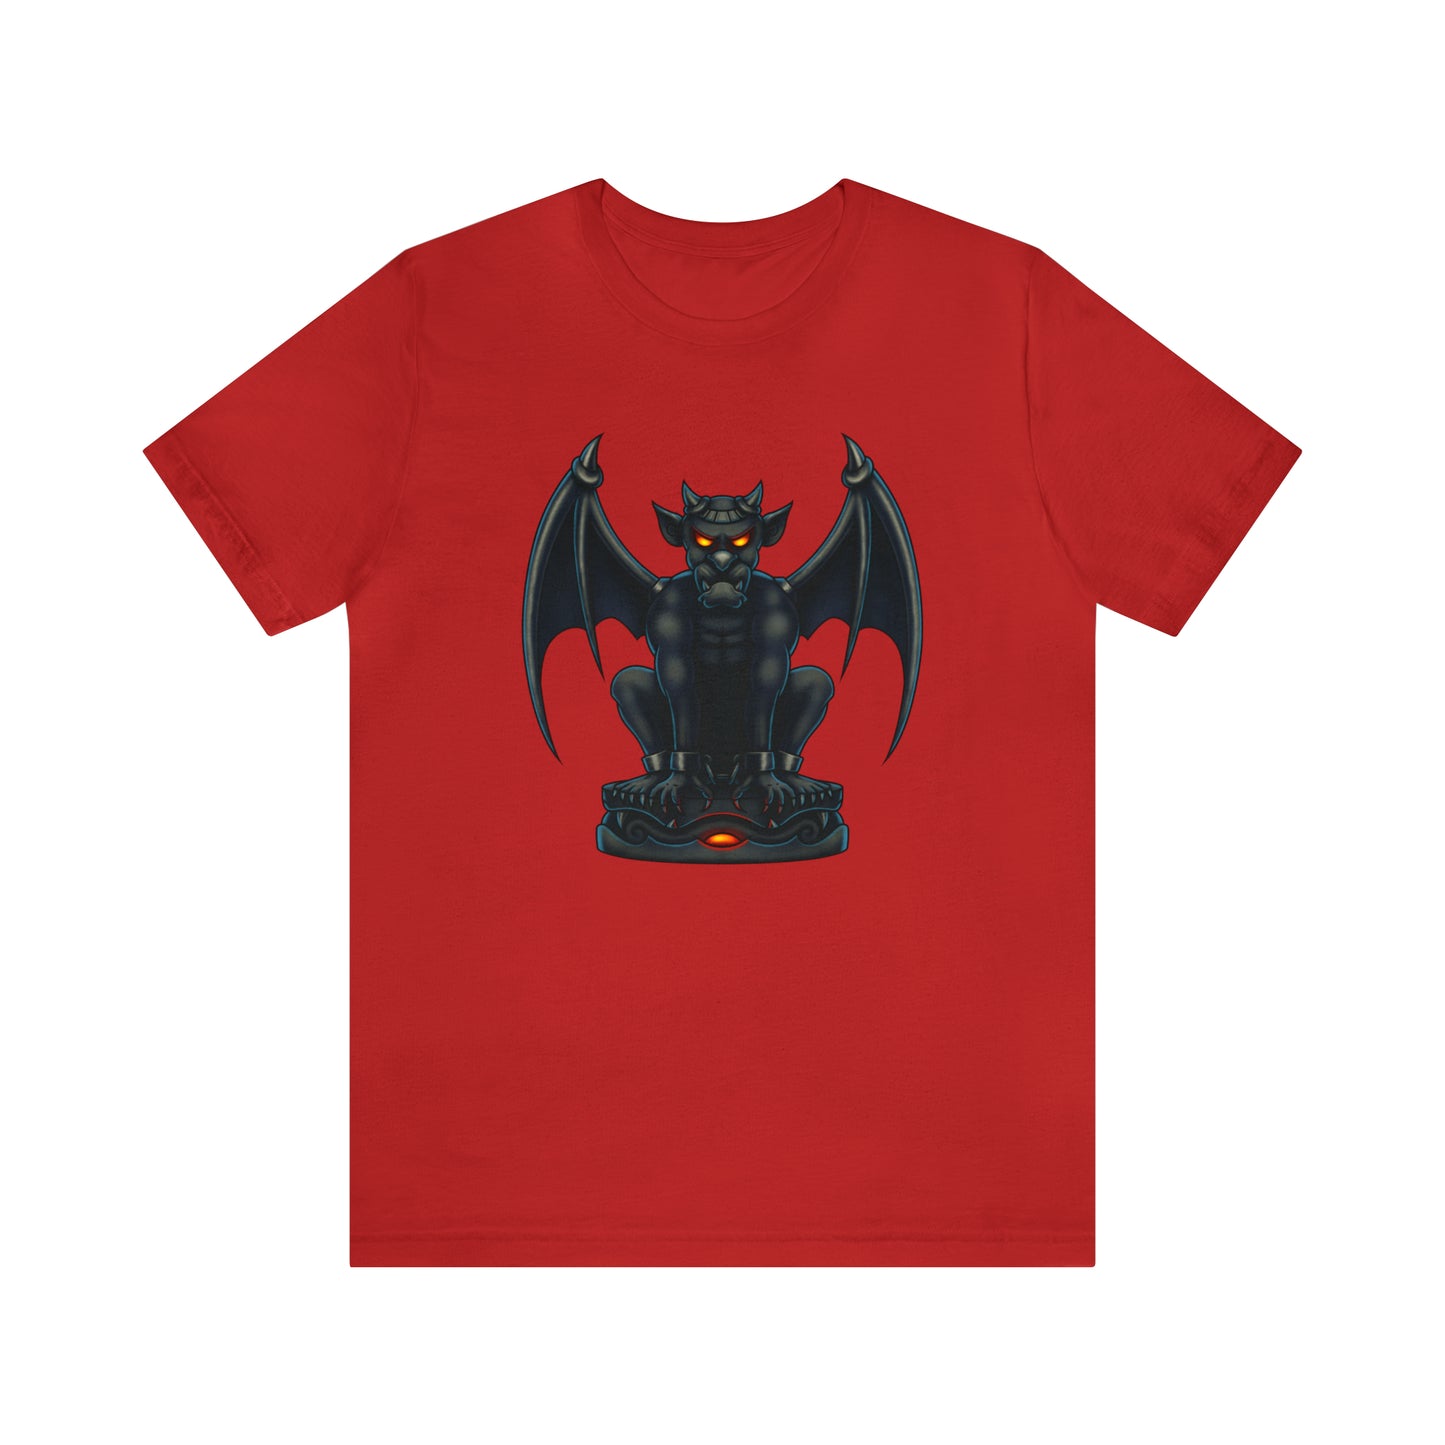 Gargoyle Shirt